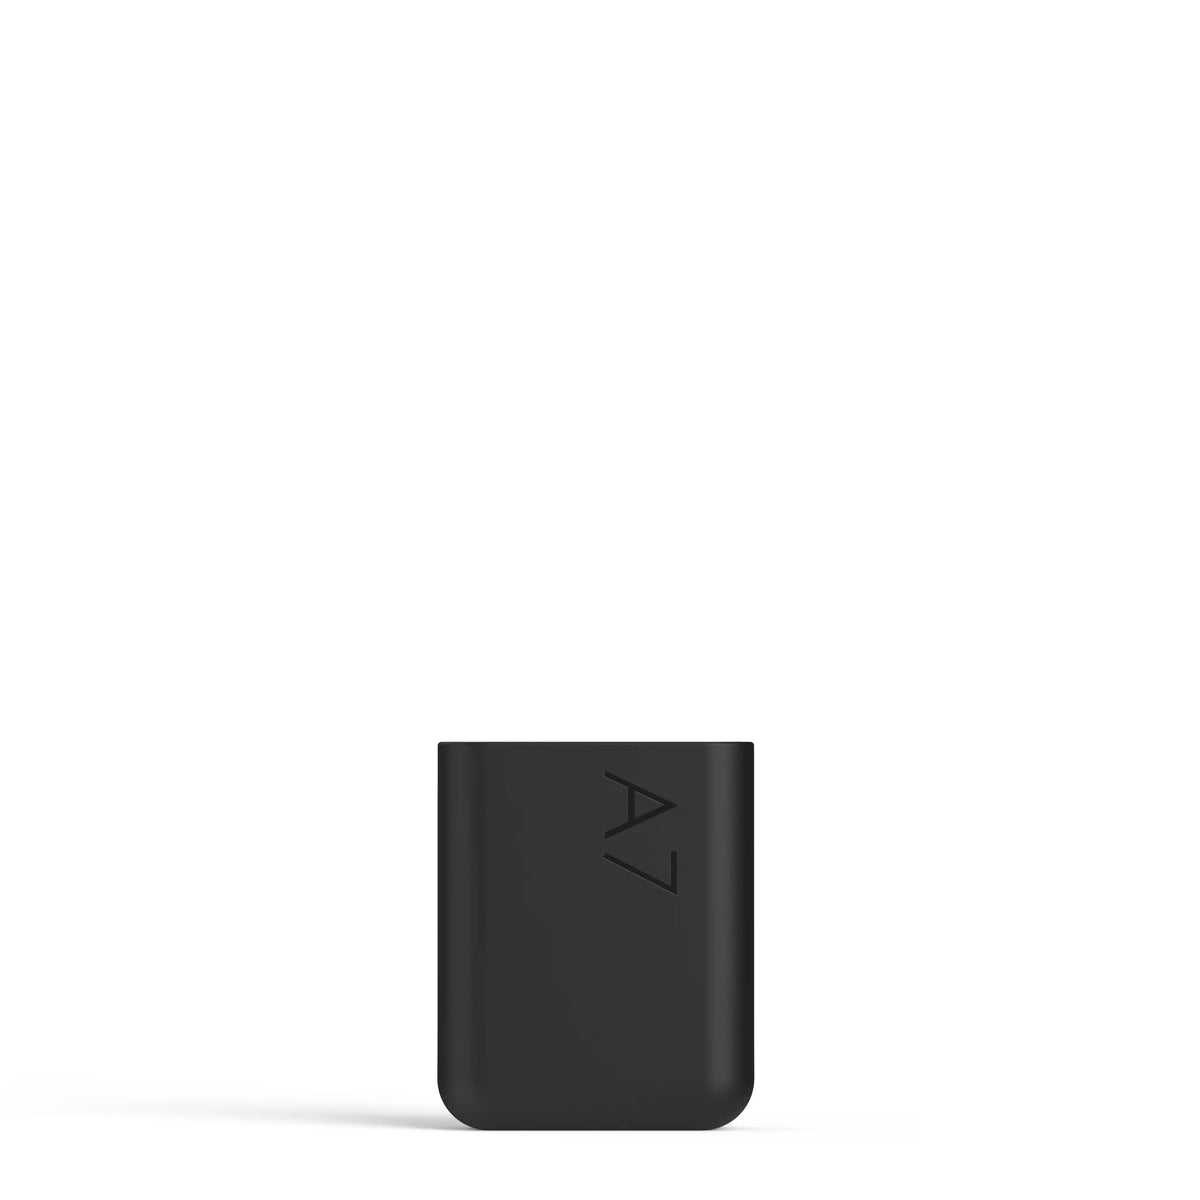 A7 memobottle Silicone Sleeve, Black Ink | memobottle - Wake Concept Store  